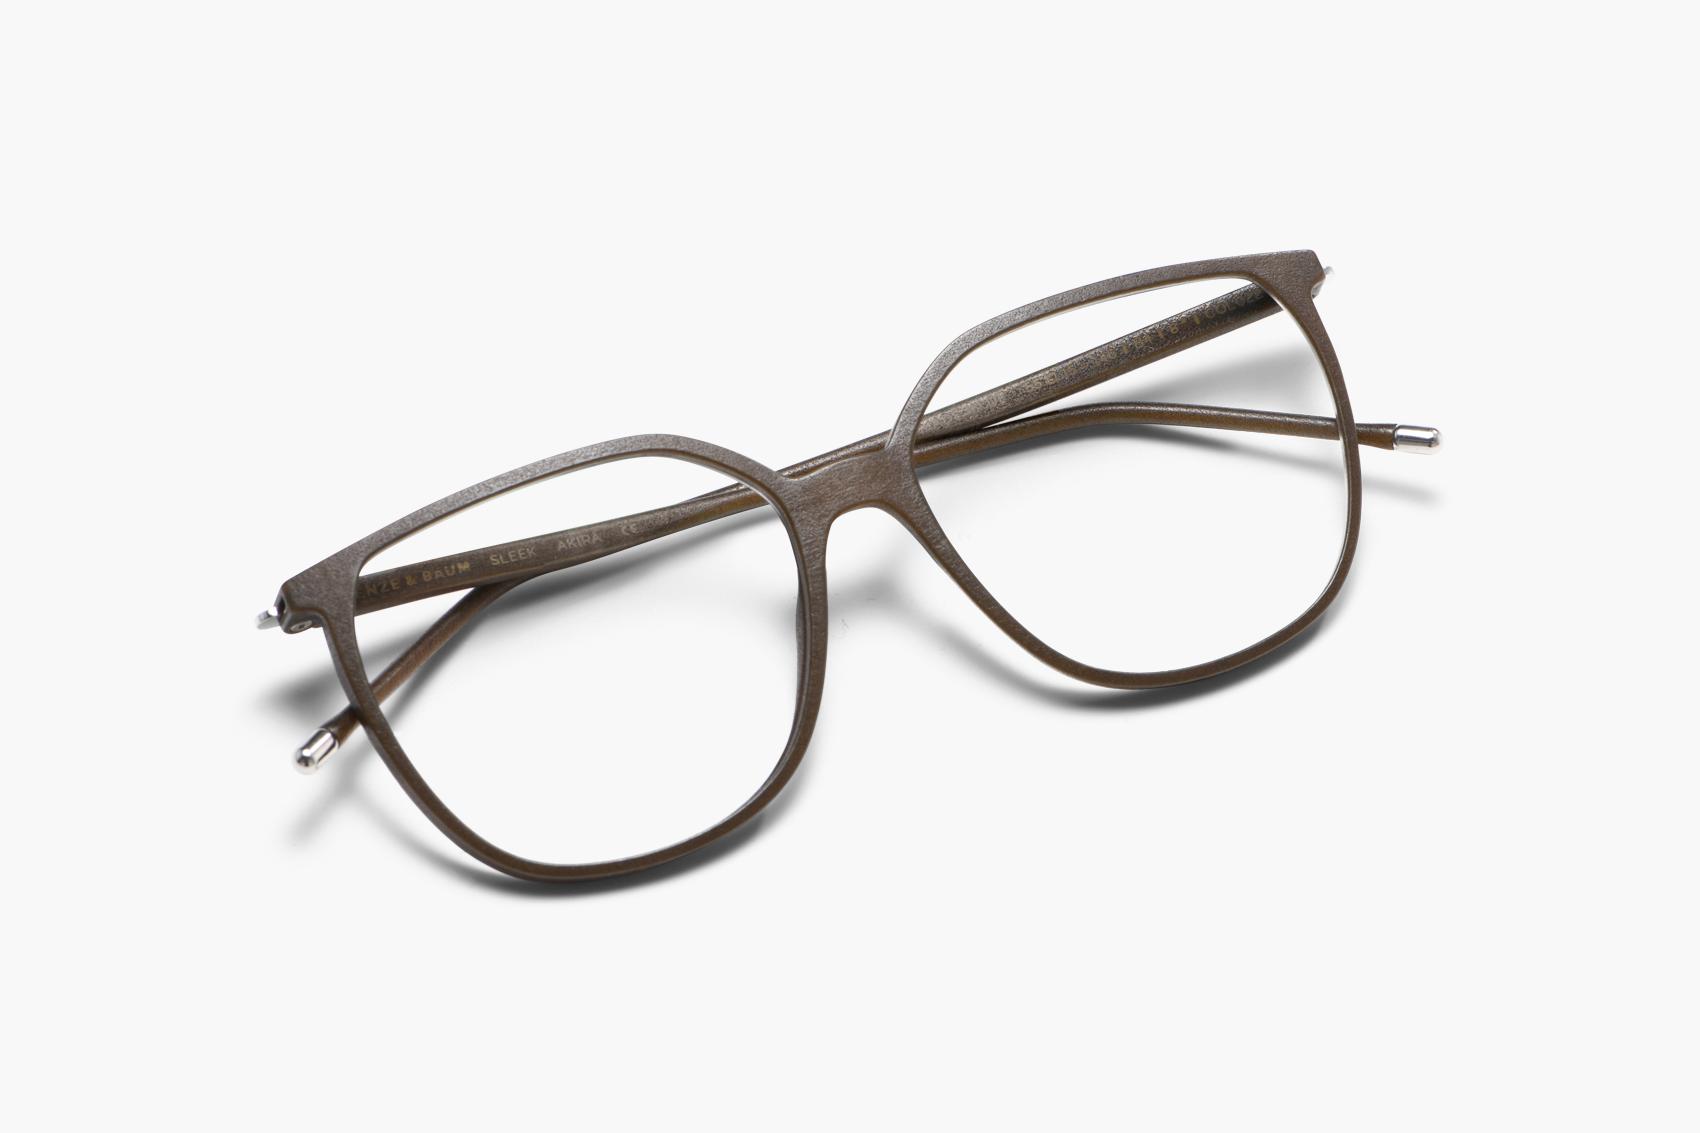 Akira by KLENZE & BAUM, Prova gli occhiali online e trova un ottico